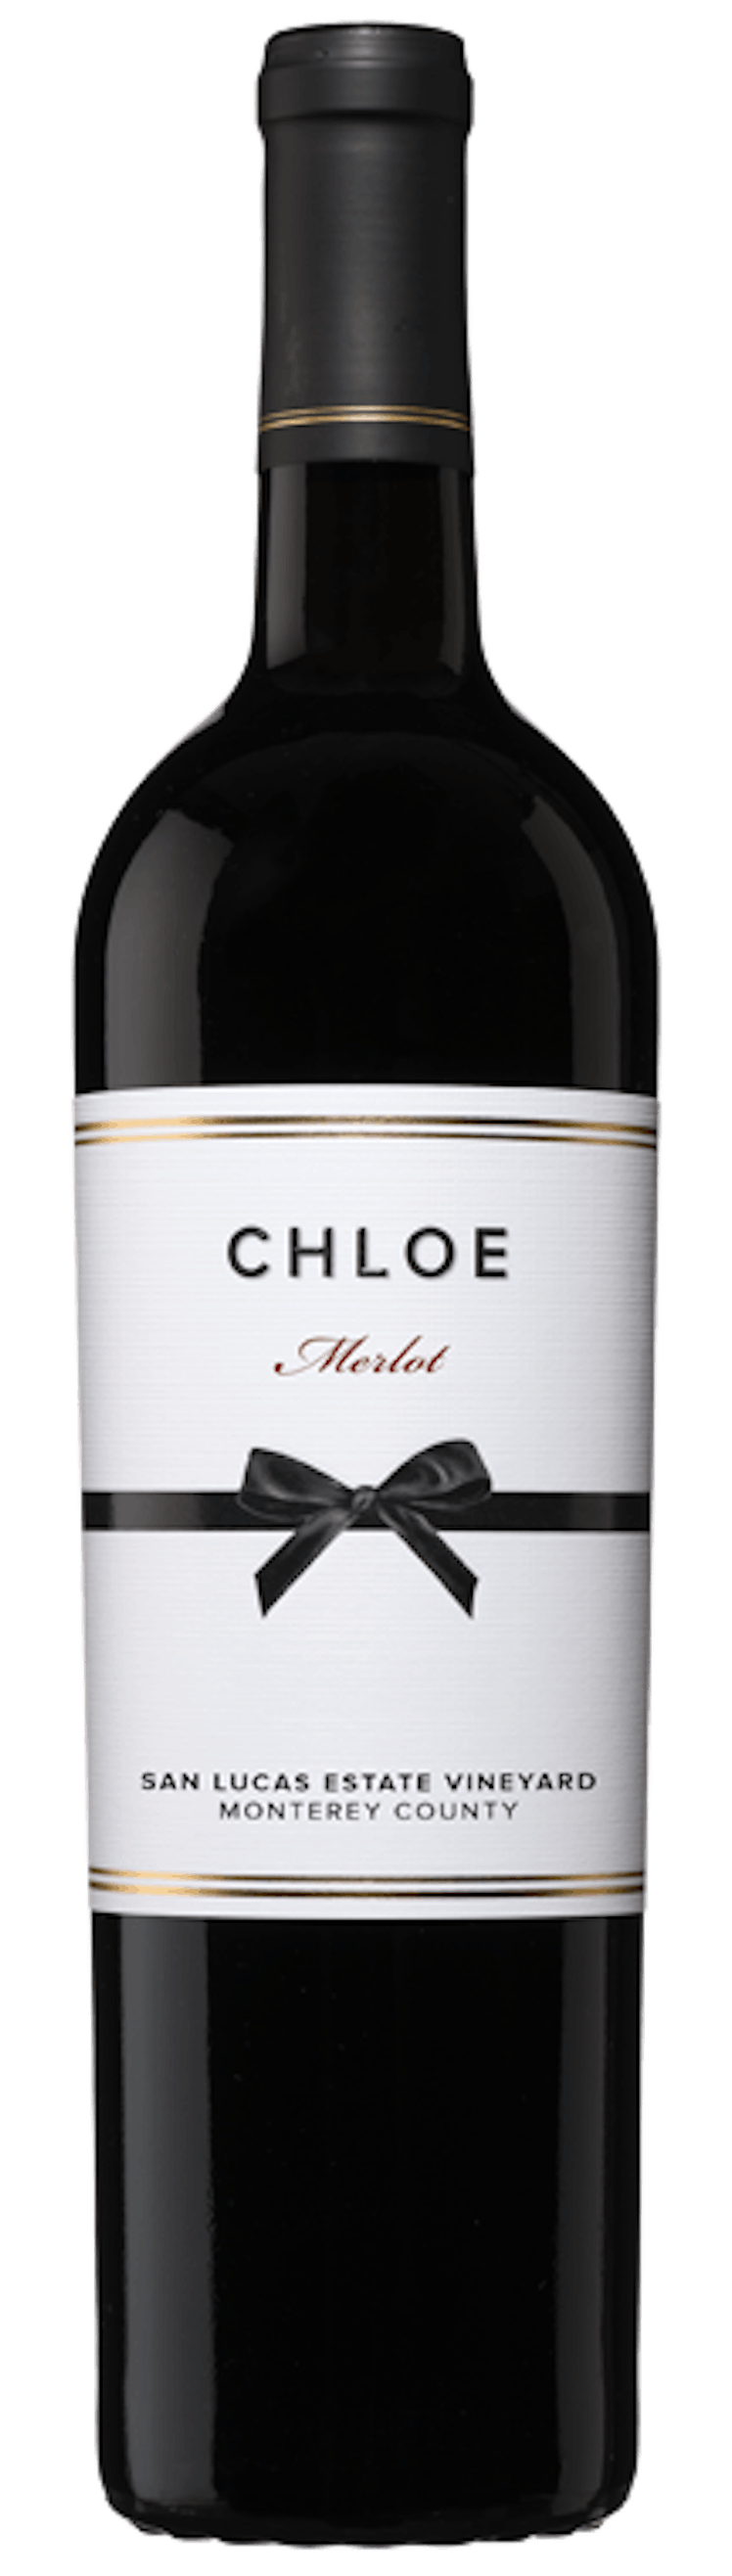 Chloe Wine Collection Merlot